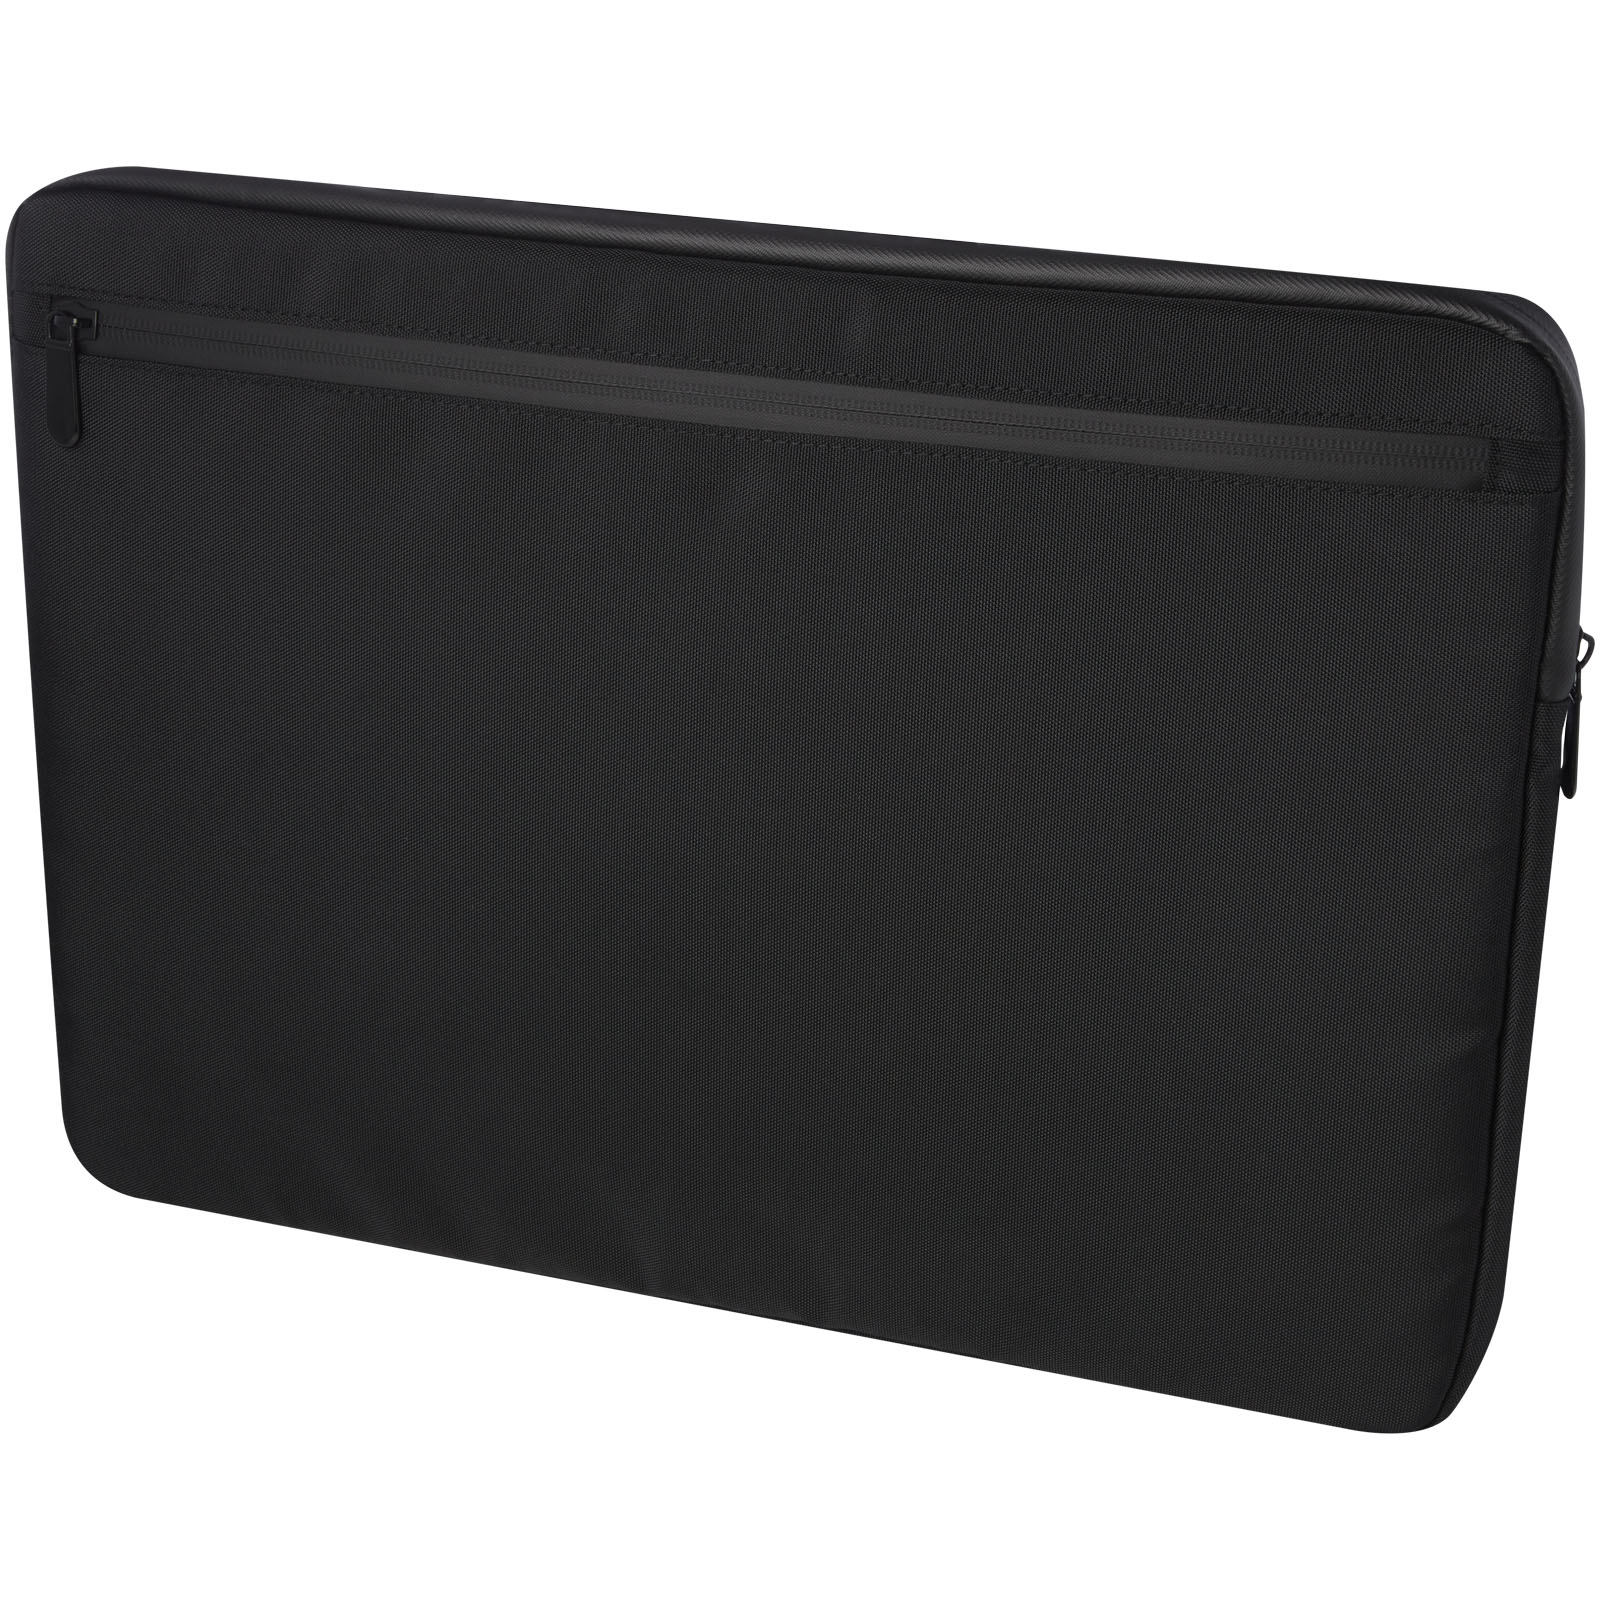 Laptop & Tablet bags - Rise 15.6